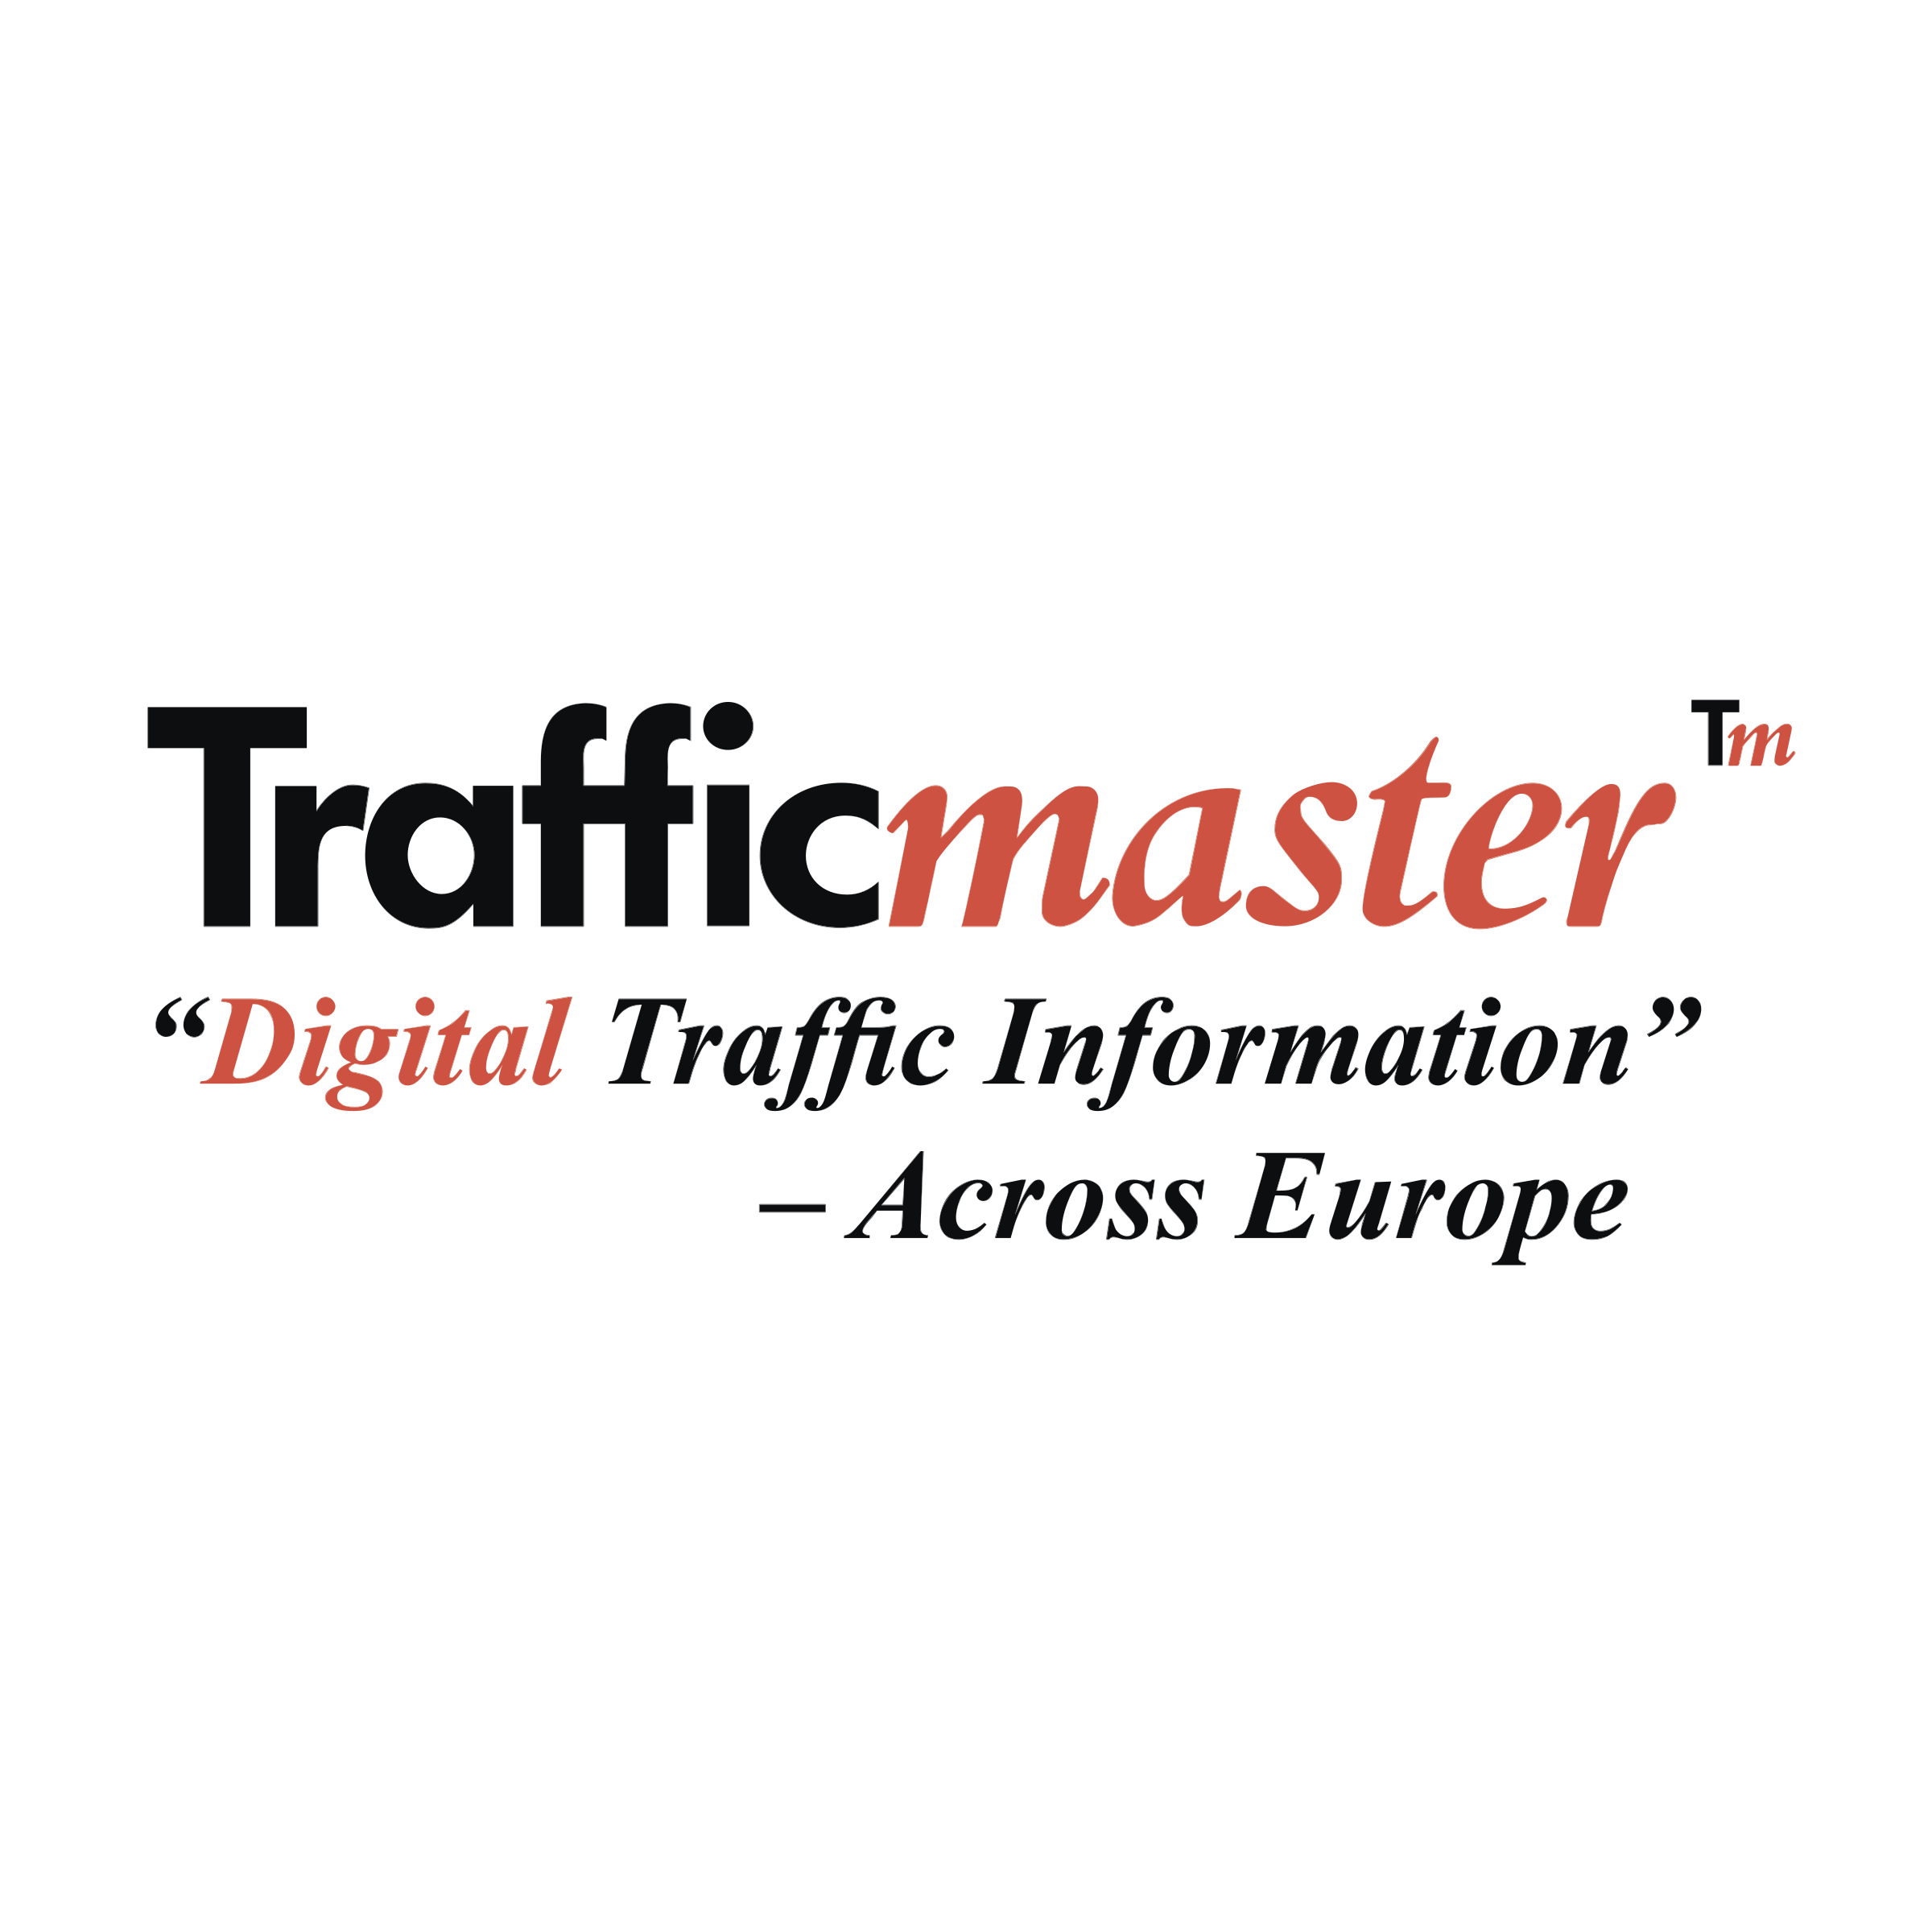 TrafficMaster Logo - TrafficMaster Logo PNG Transparent & SVG Vector - Freebie Supply